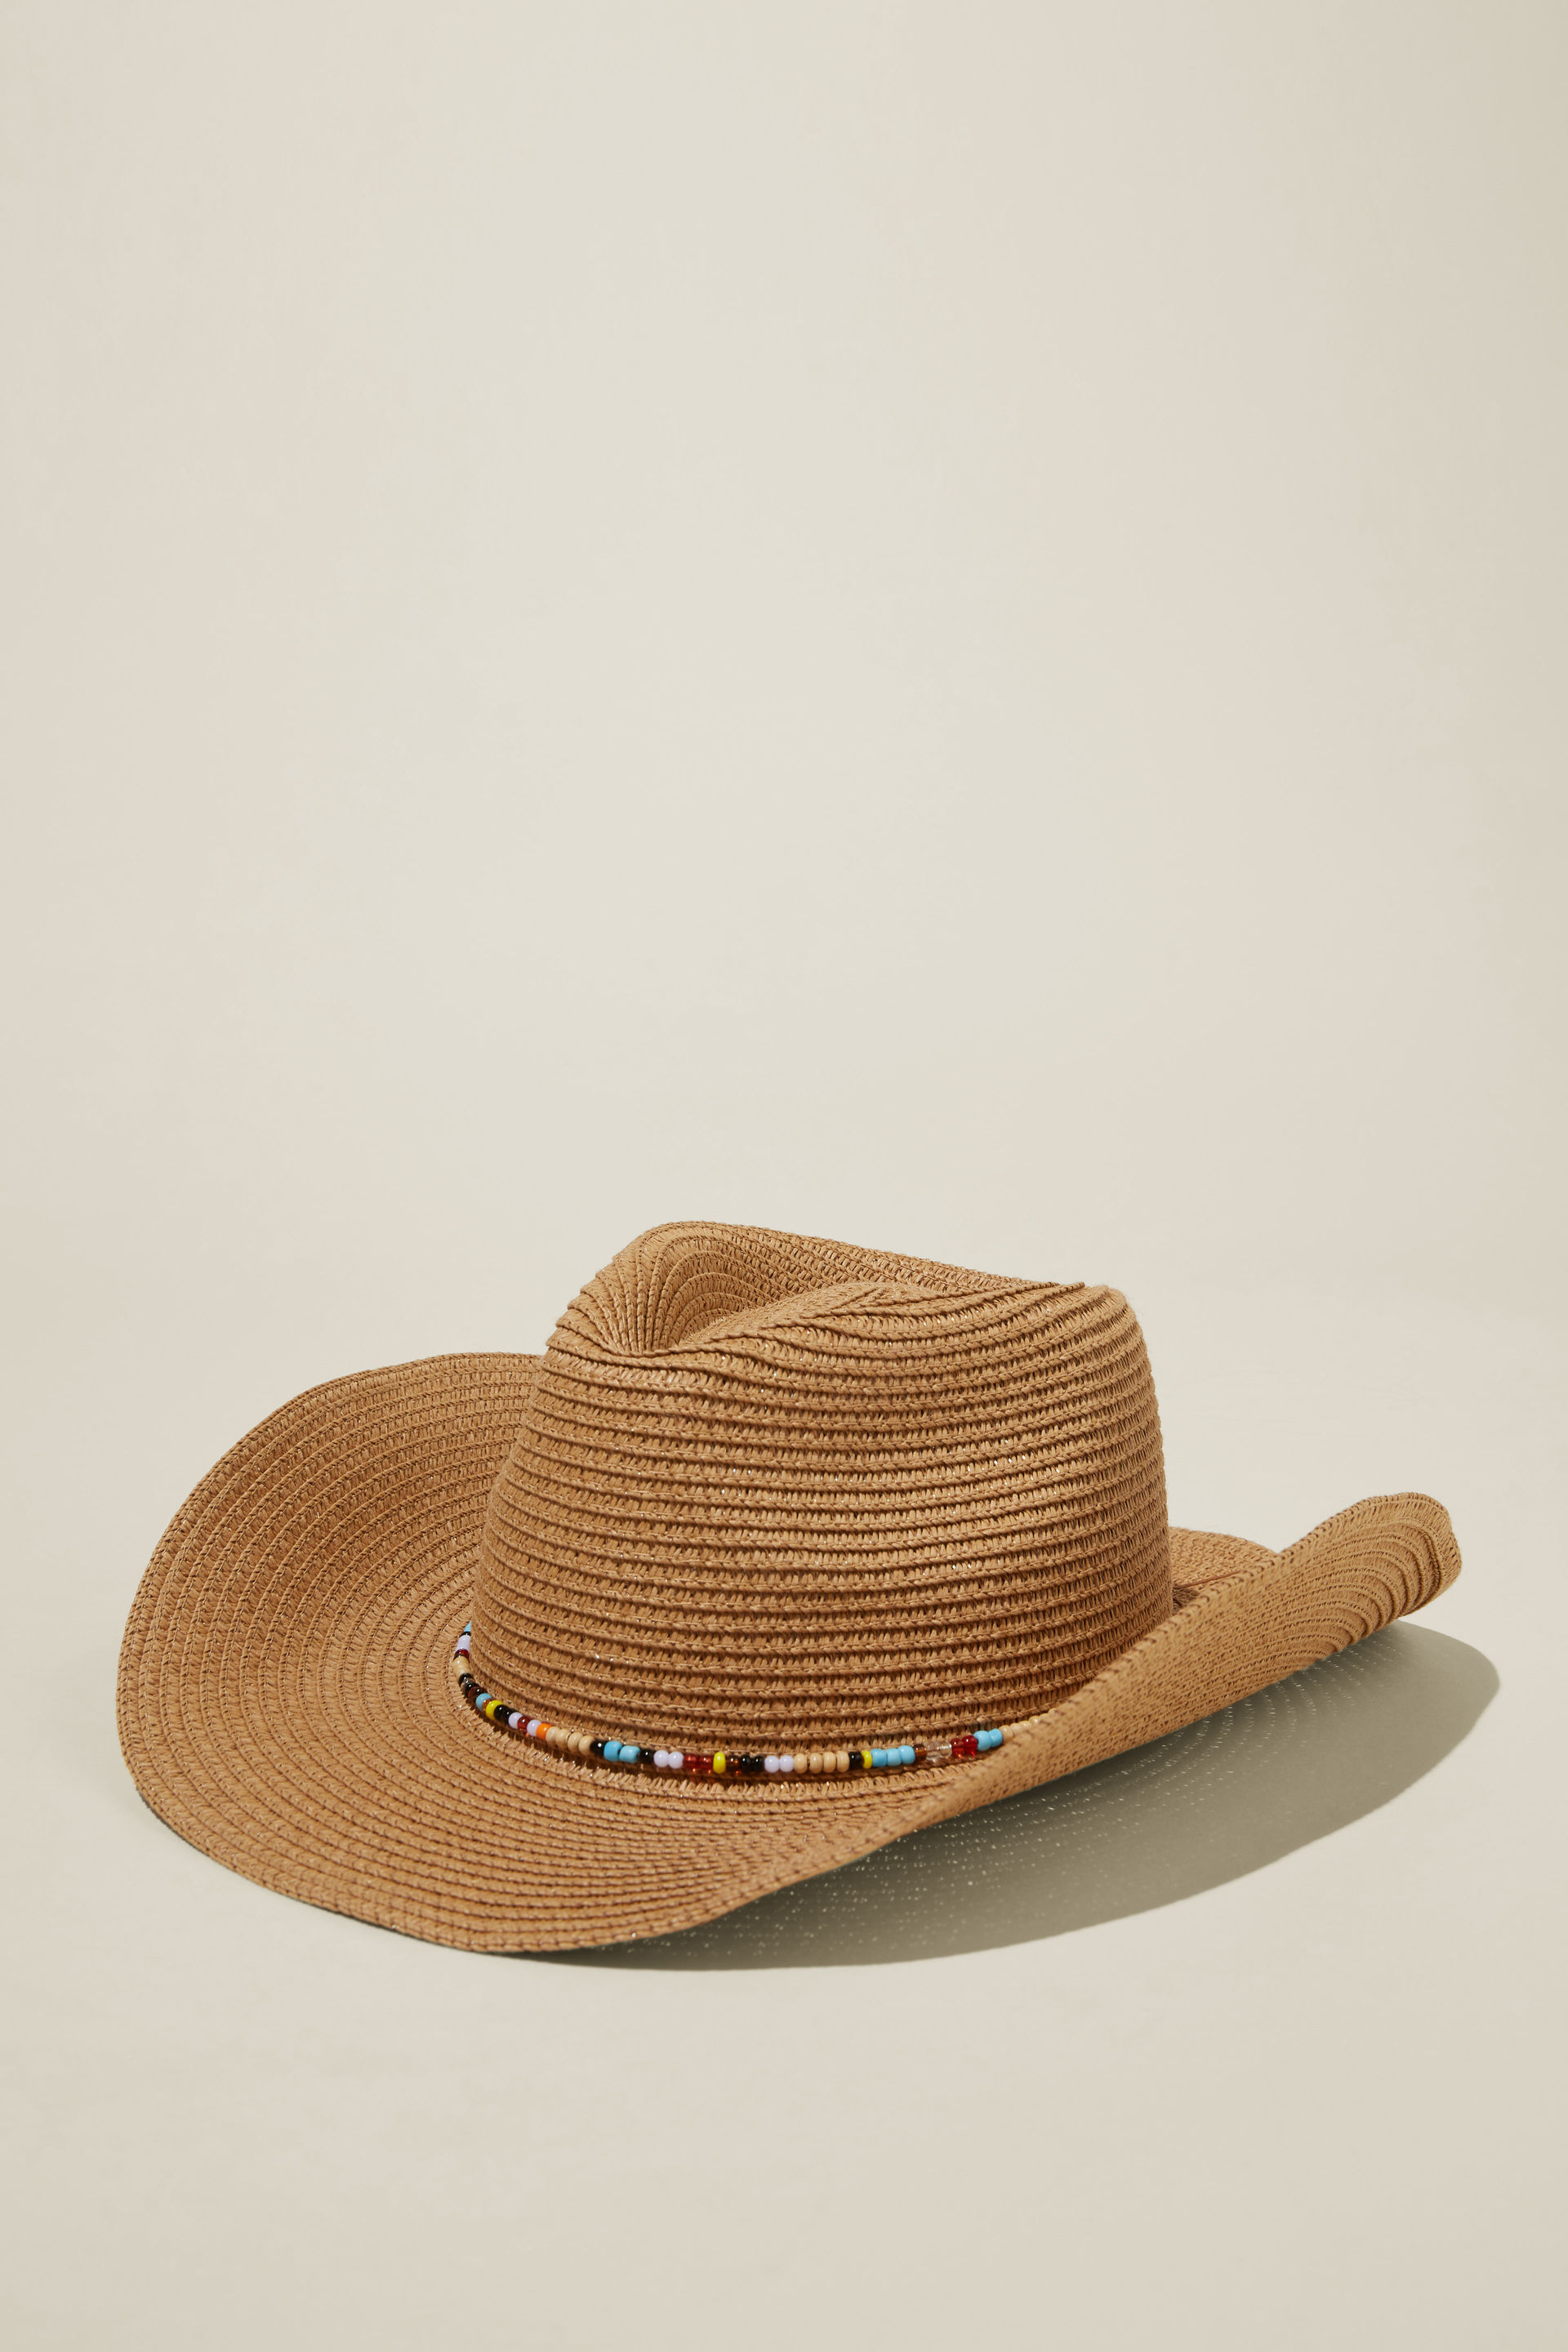 Rubi - Marley Cowboy Hat - Tan/multi beads